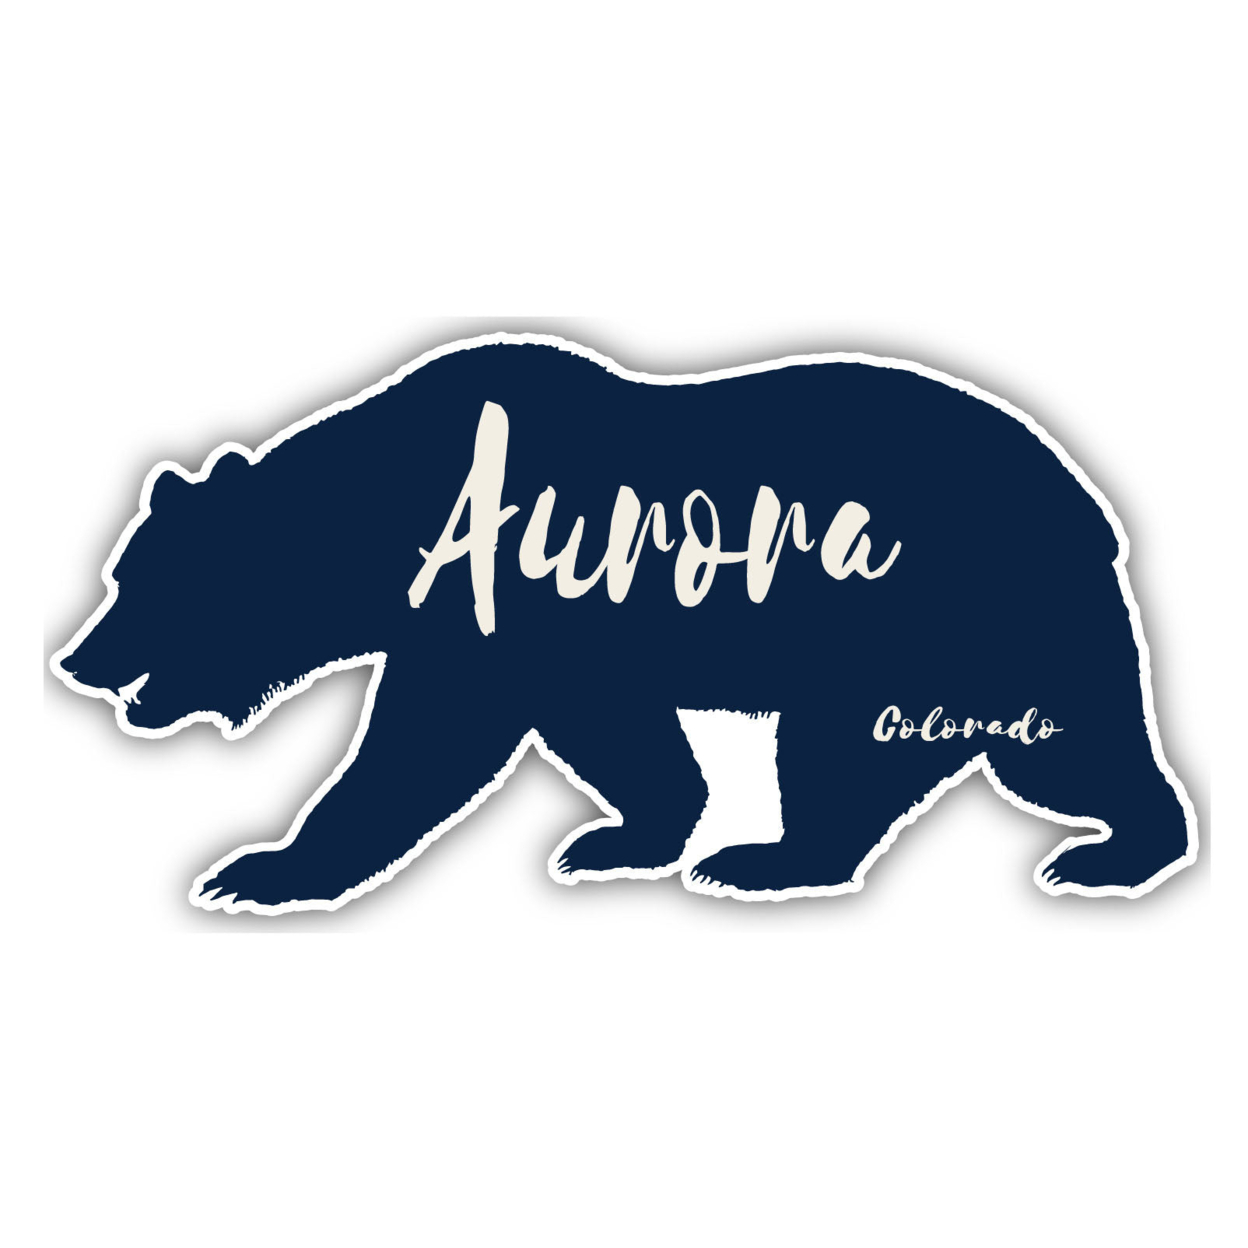 Aurora Colorado Souvenir Decorative Stickers (Choose Theme And Size) - 4-Pack, 10-Inch, Bear